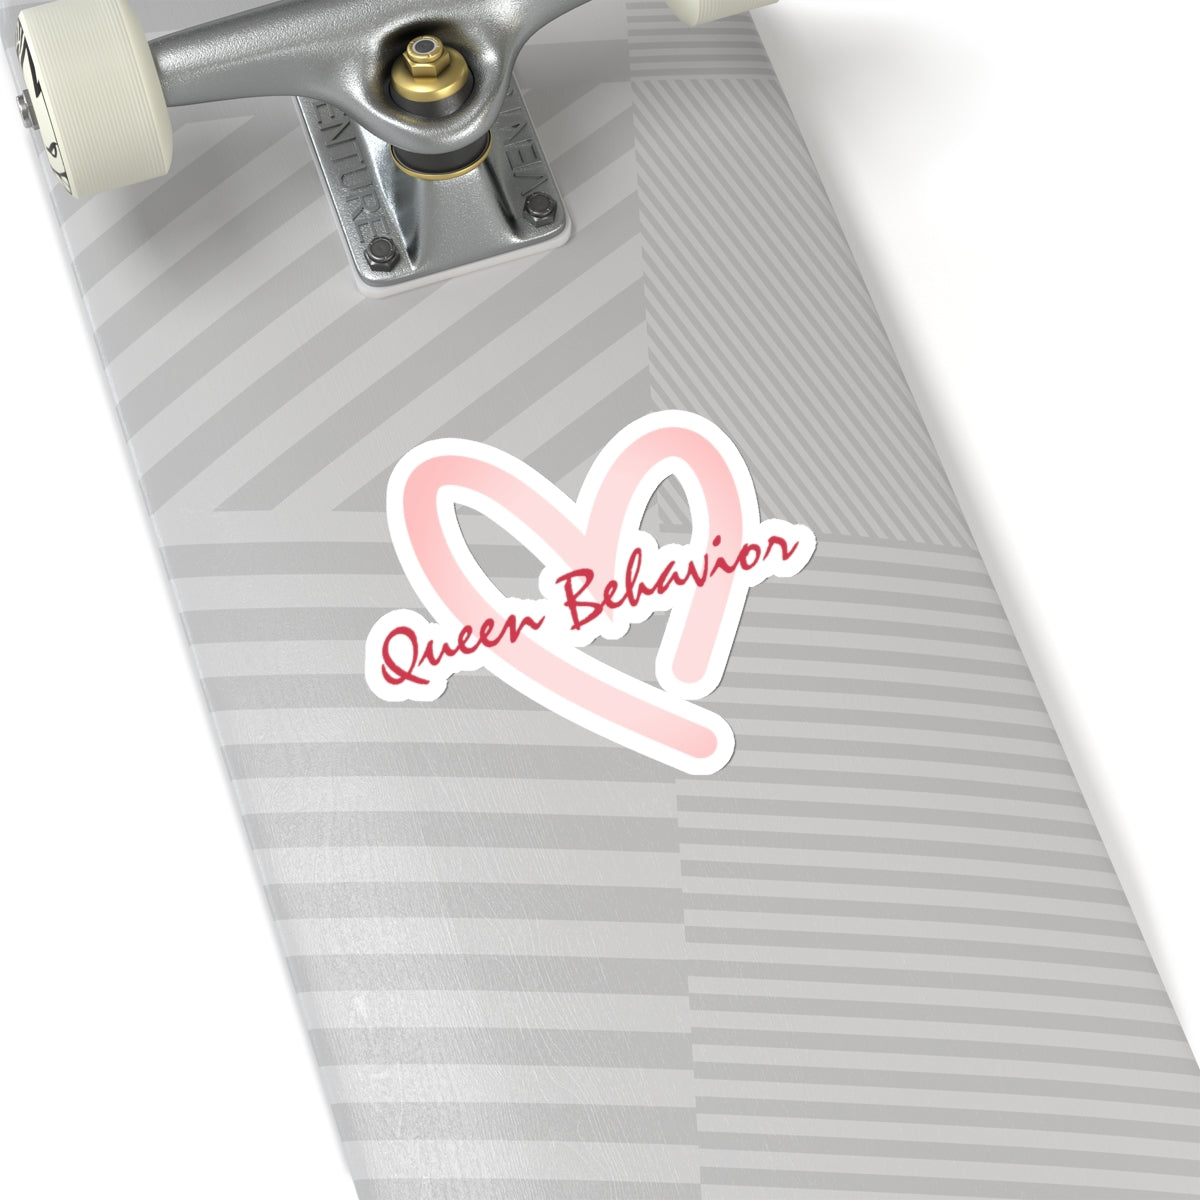 Queen Behavior Kiss-Cut Stickers